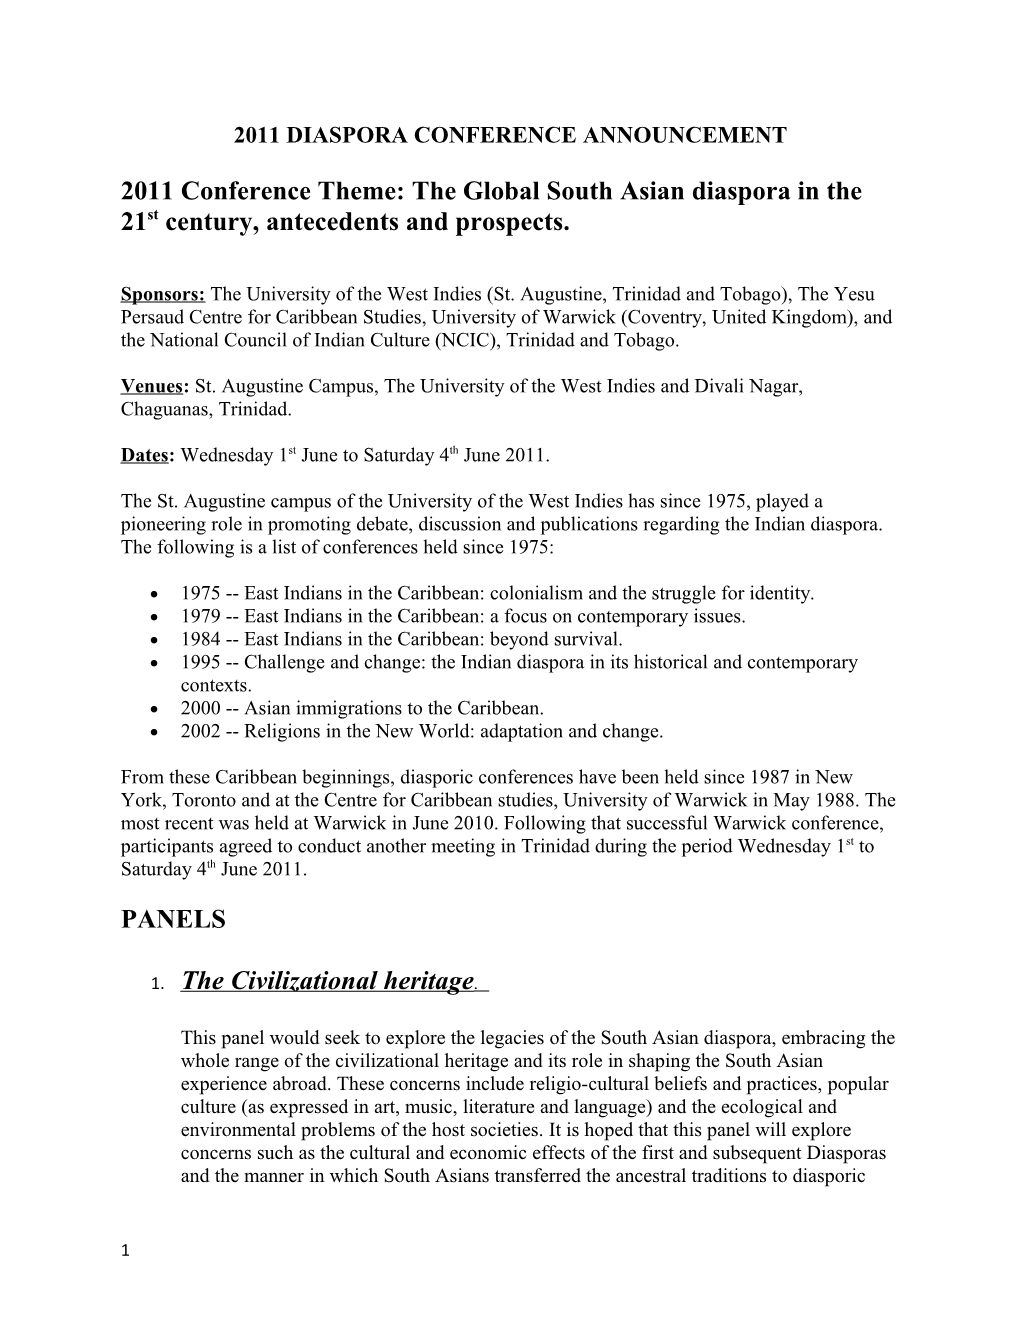 2011 Diaspora Conference Announcement